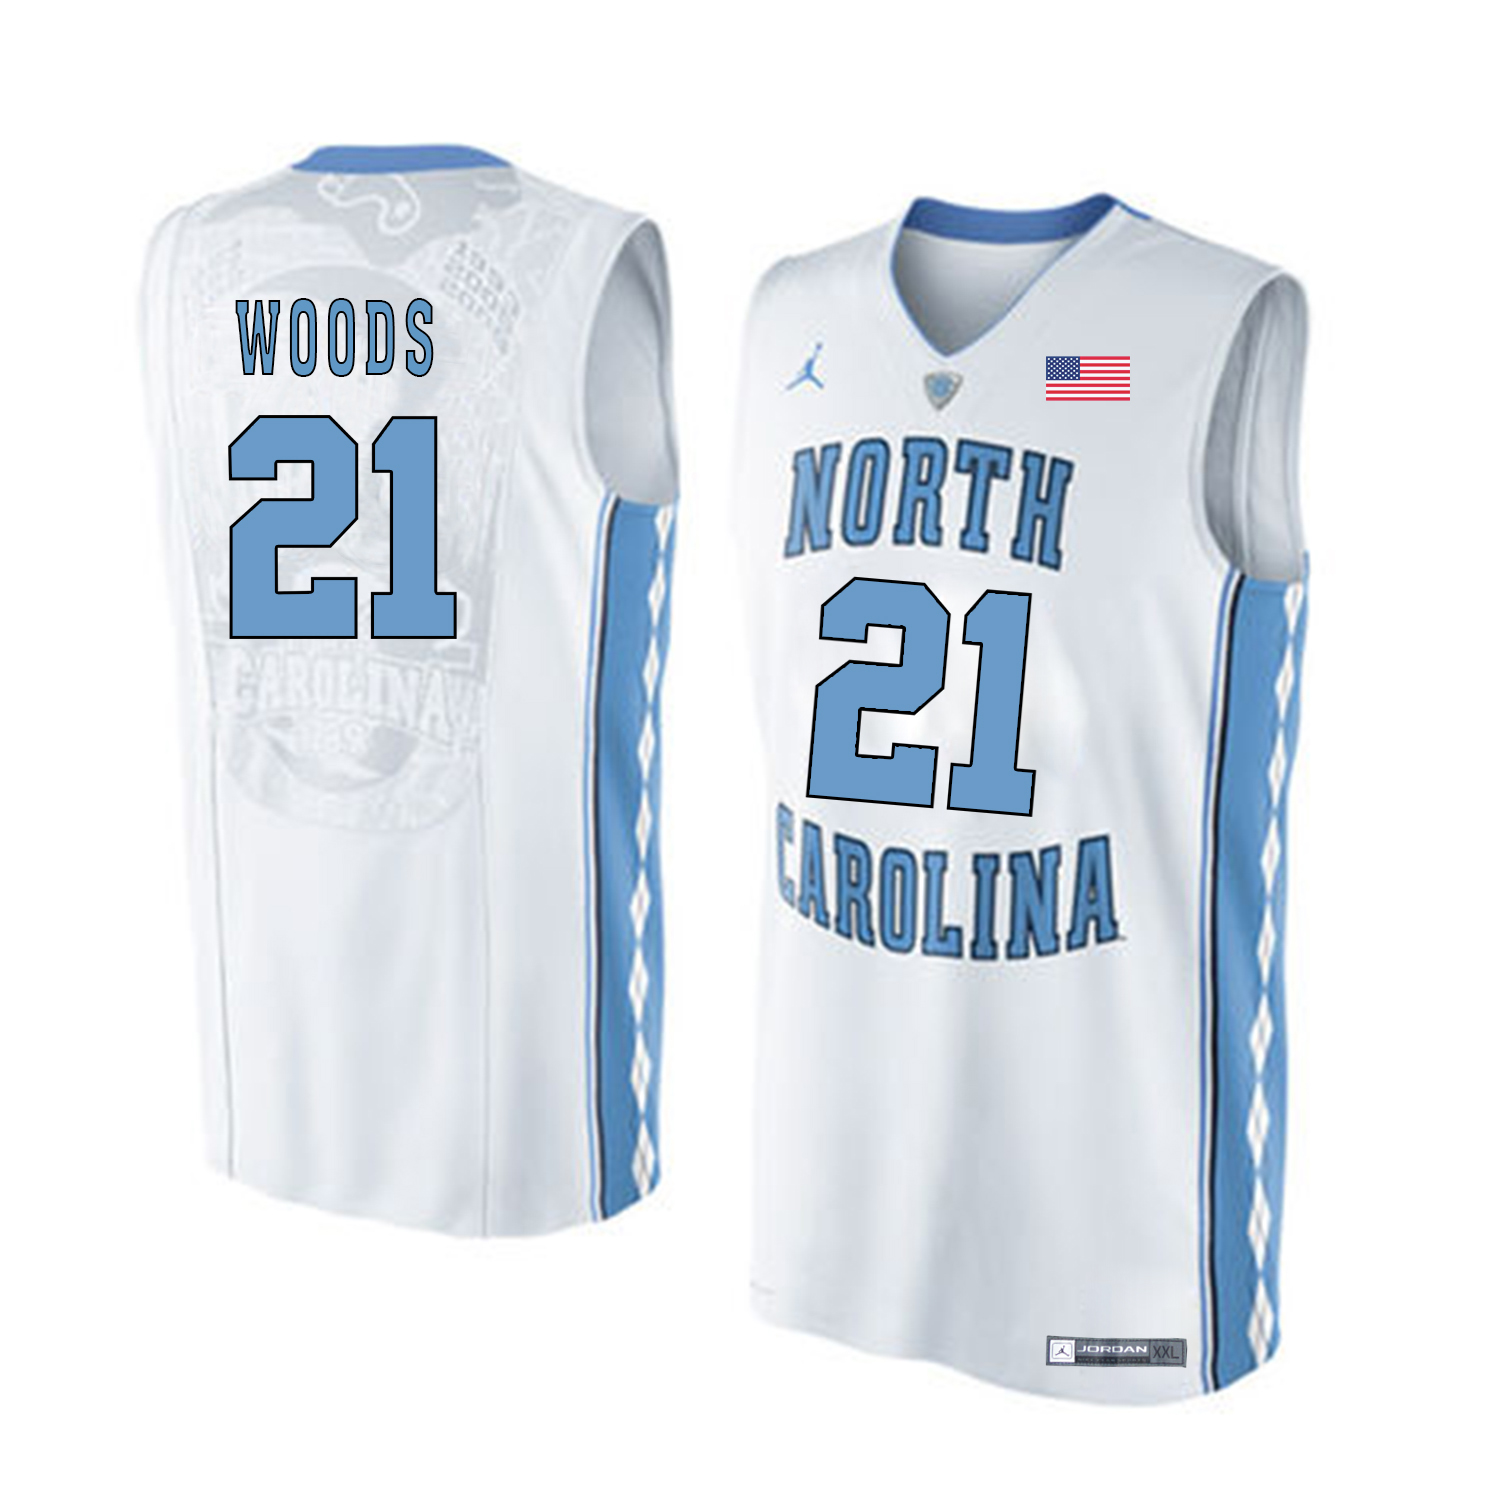 North Carolina Tar Heels 21 Seventh Woods White College Basketball Jersey